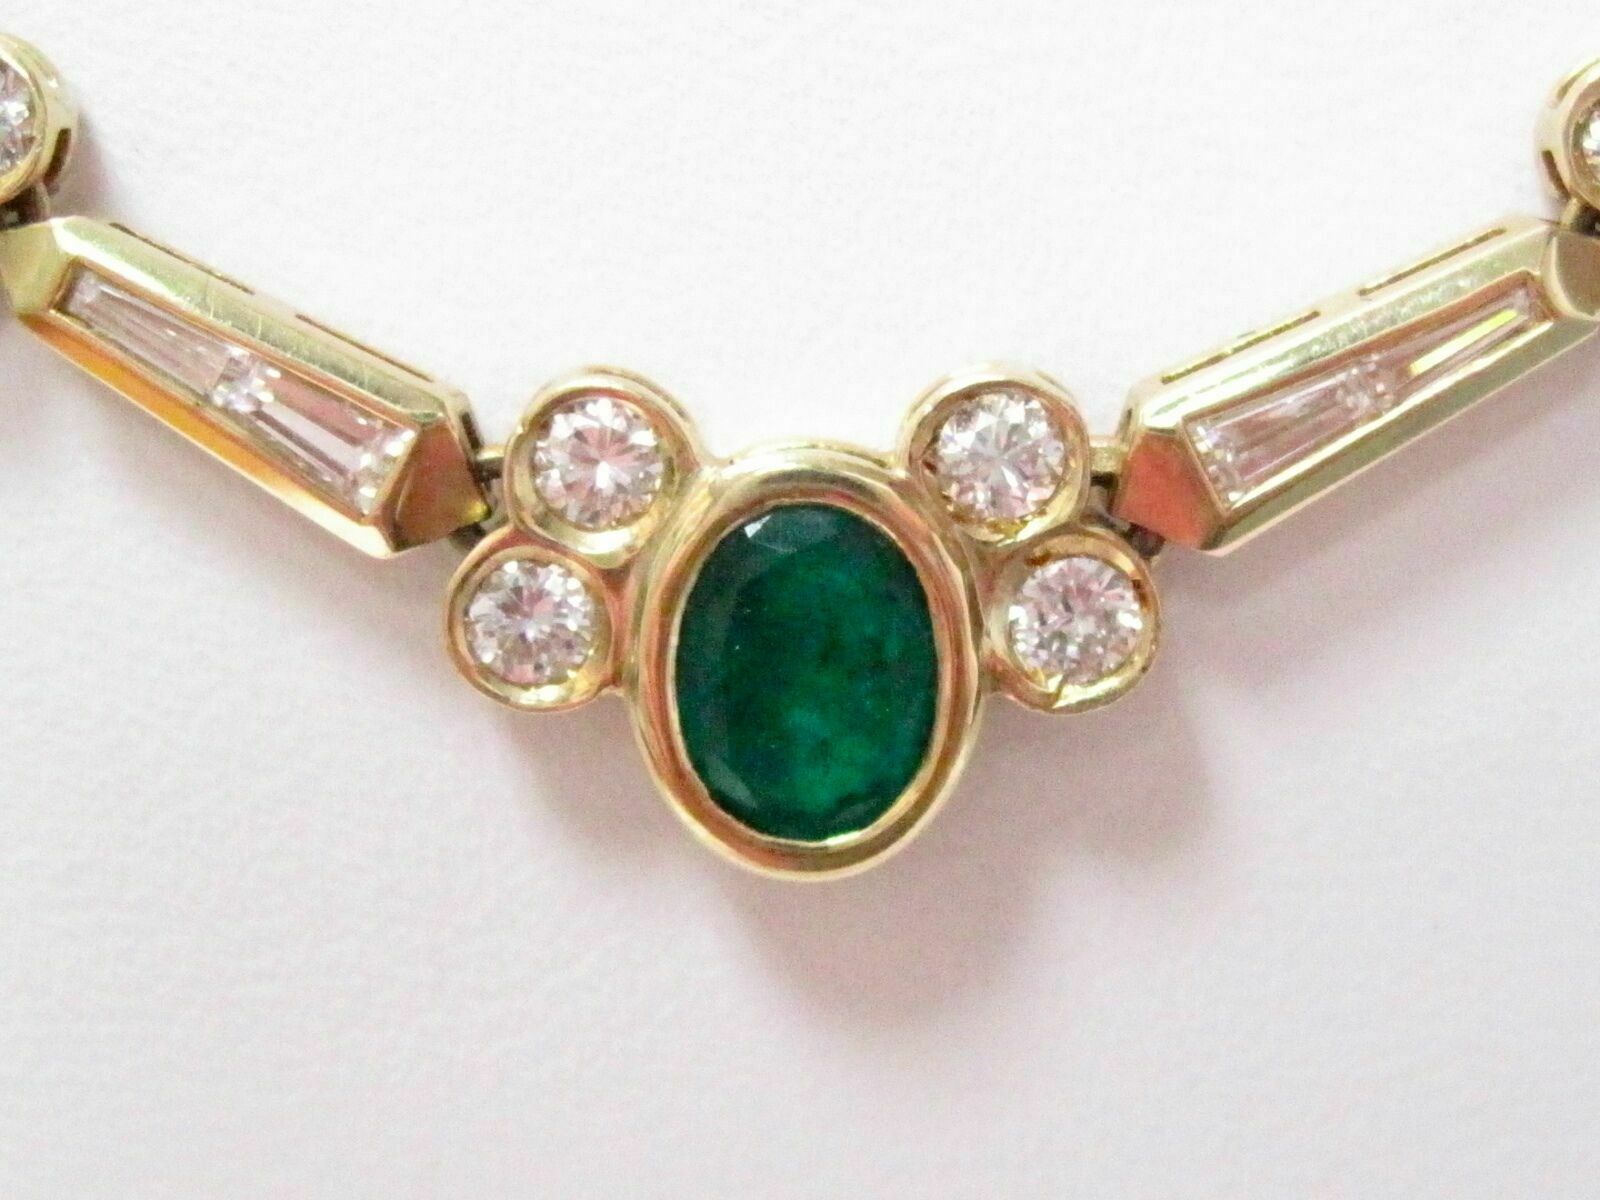 Fine 18k Yellow Gold Emerald and Diamond Pendant Necklace